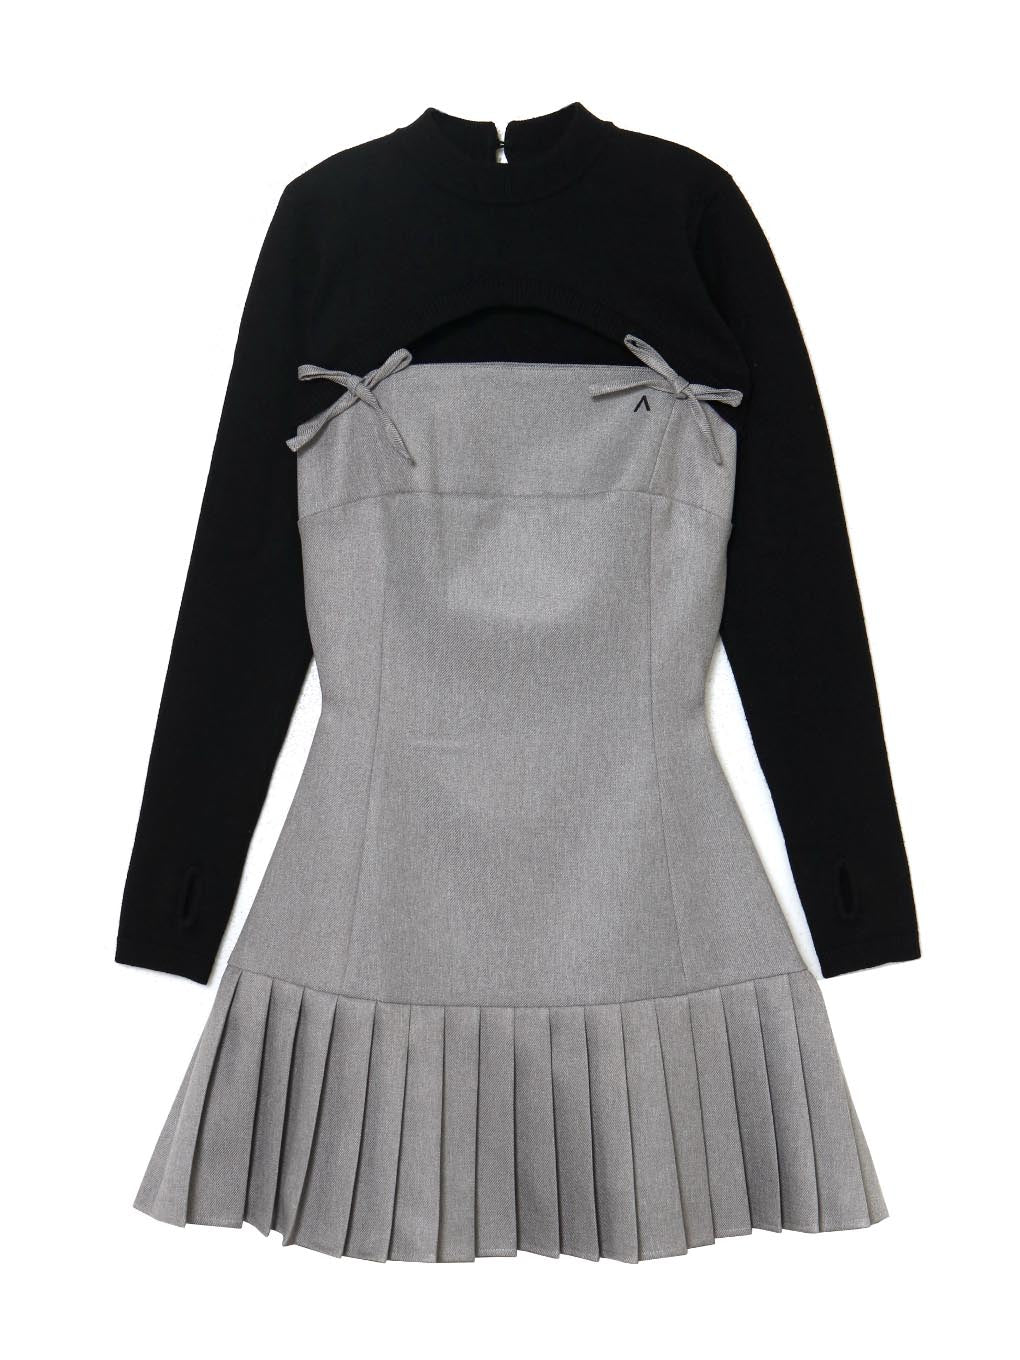 Karen knit set mini dress grayレディース